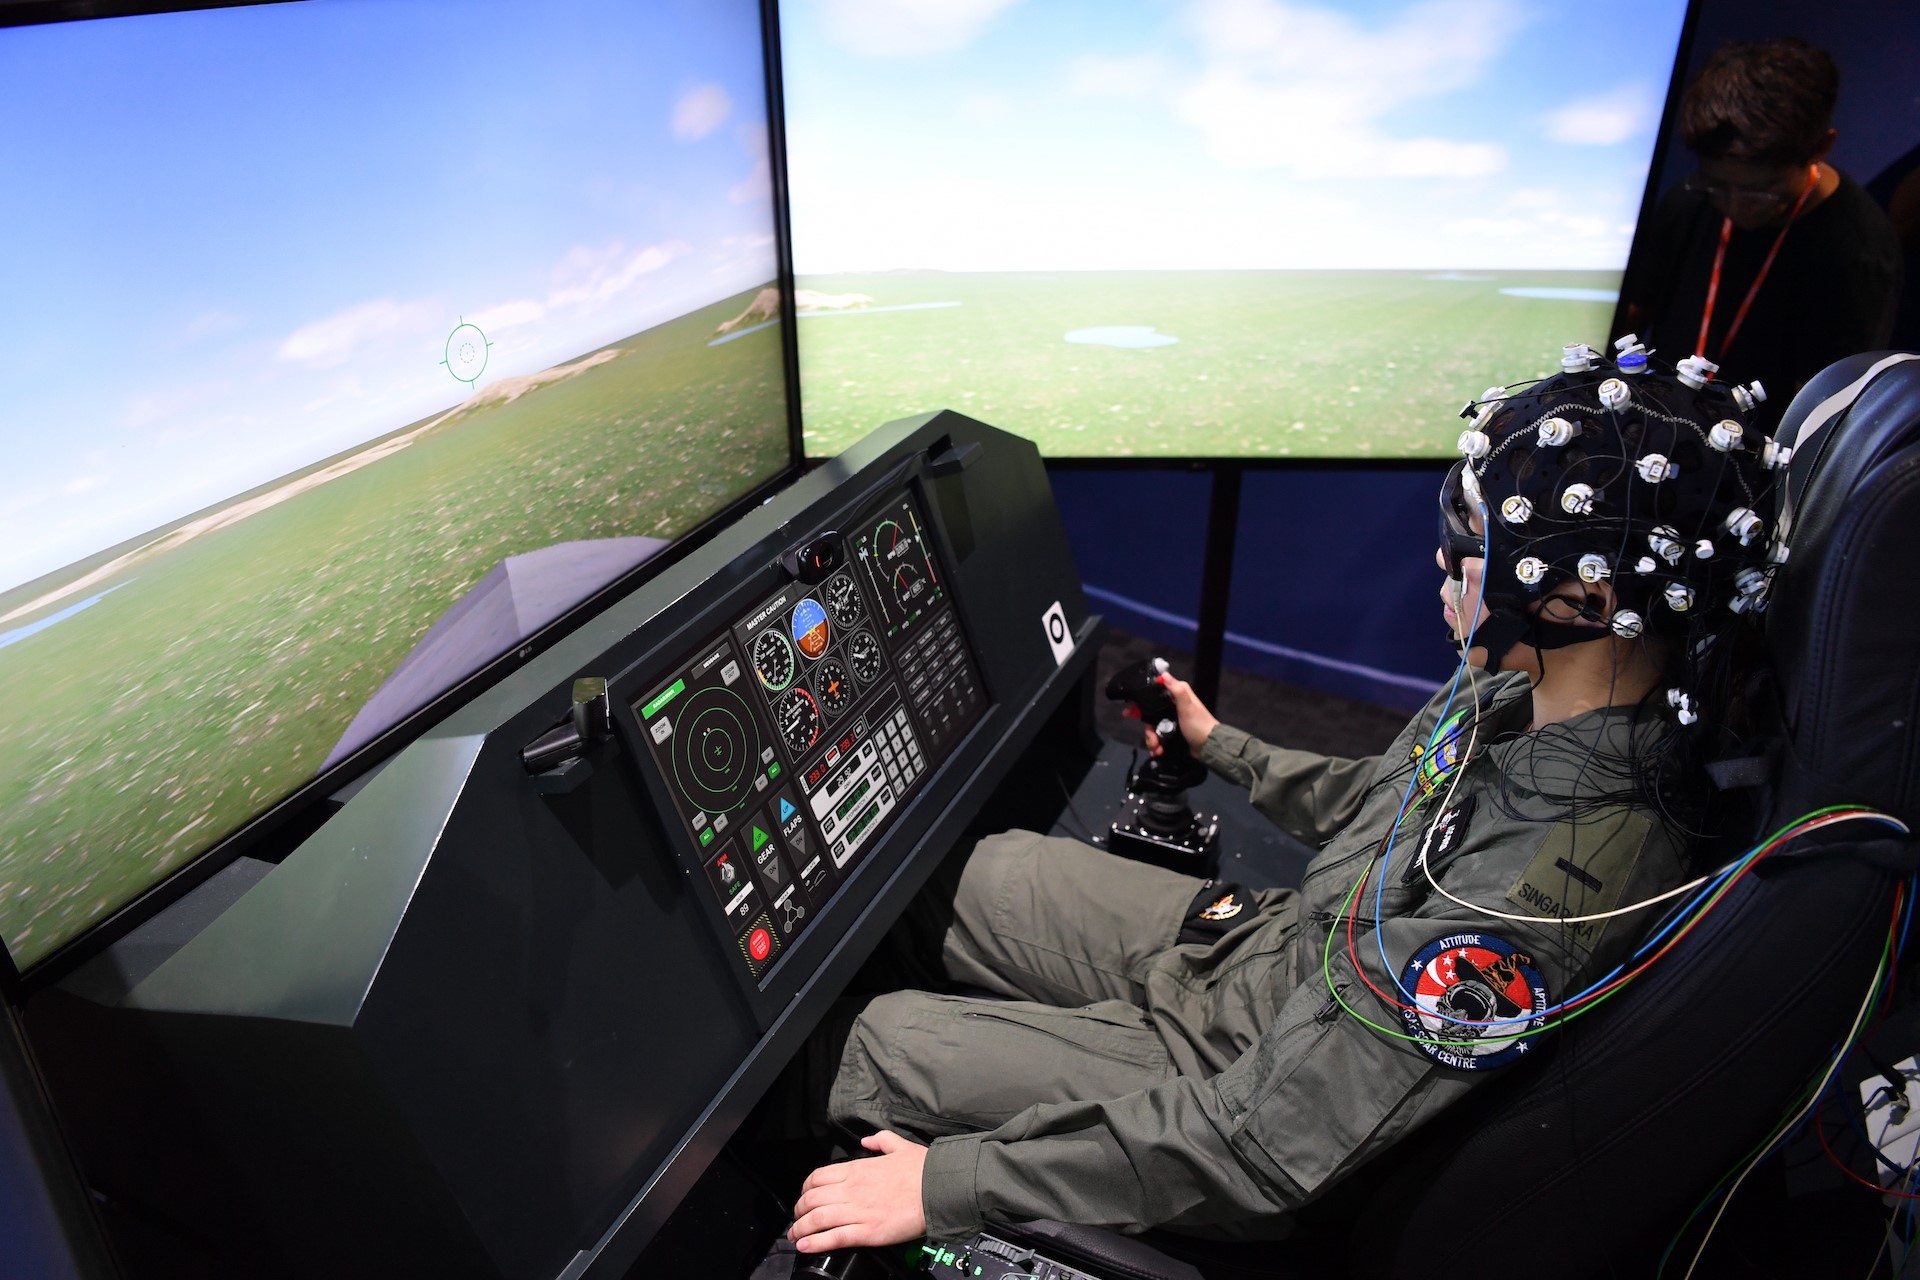 RSAF uses simulators & AI to better determine pilot potential